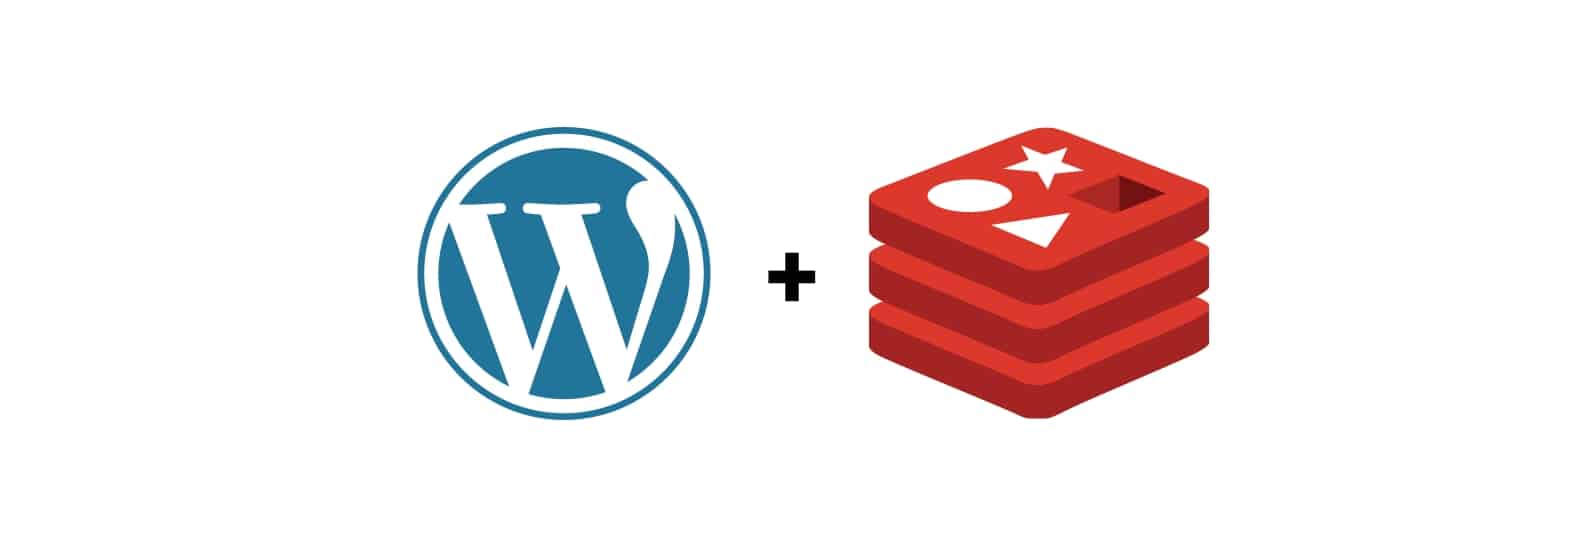 WordPress + Redis